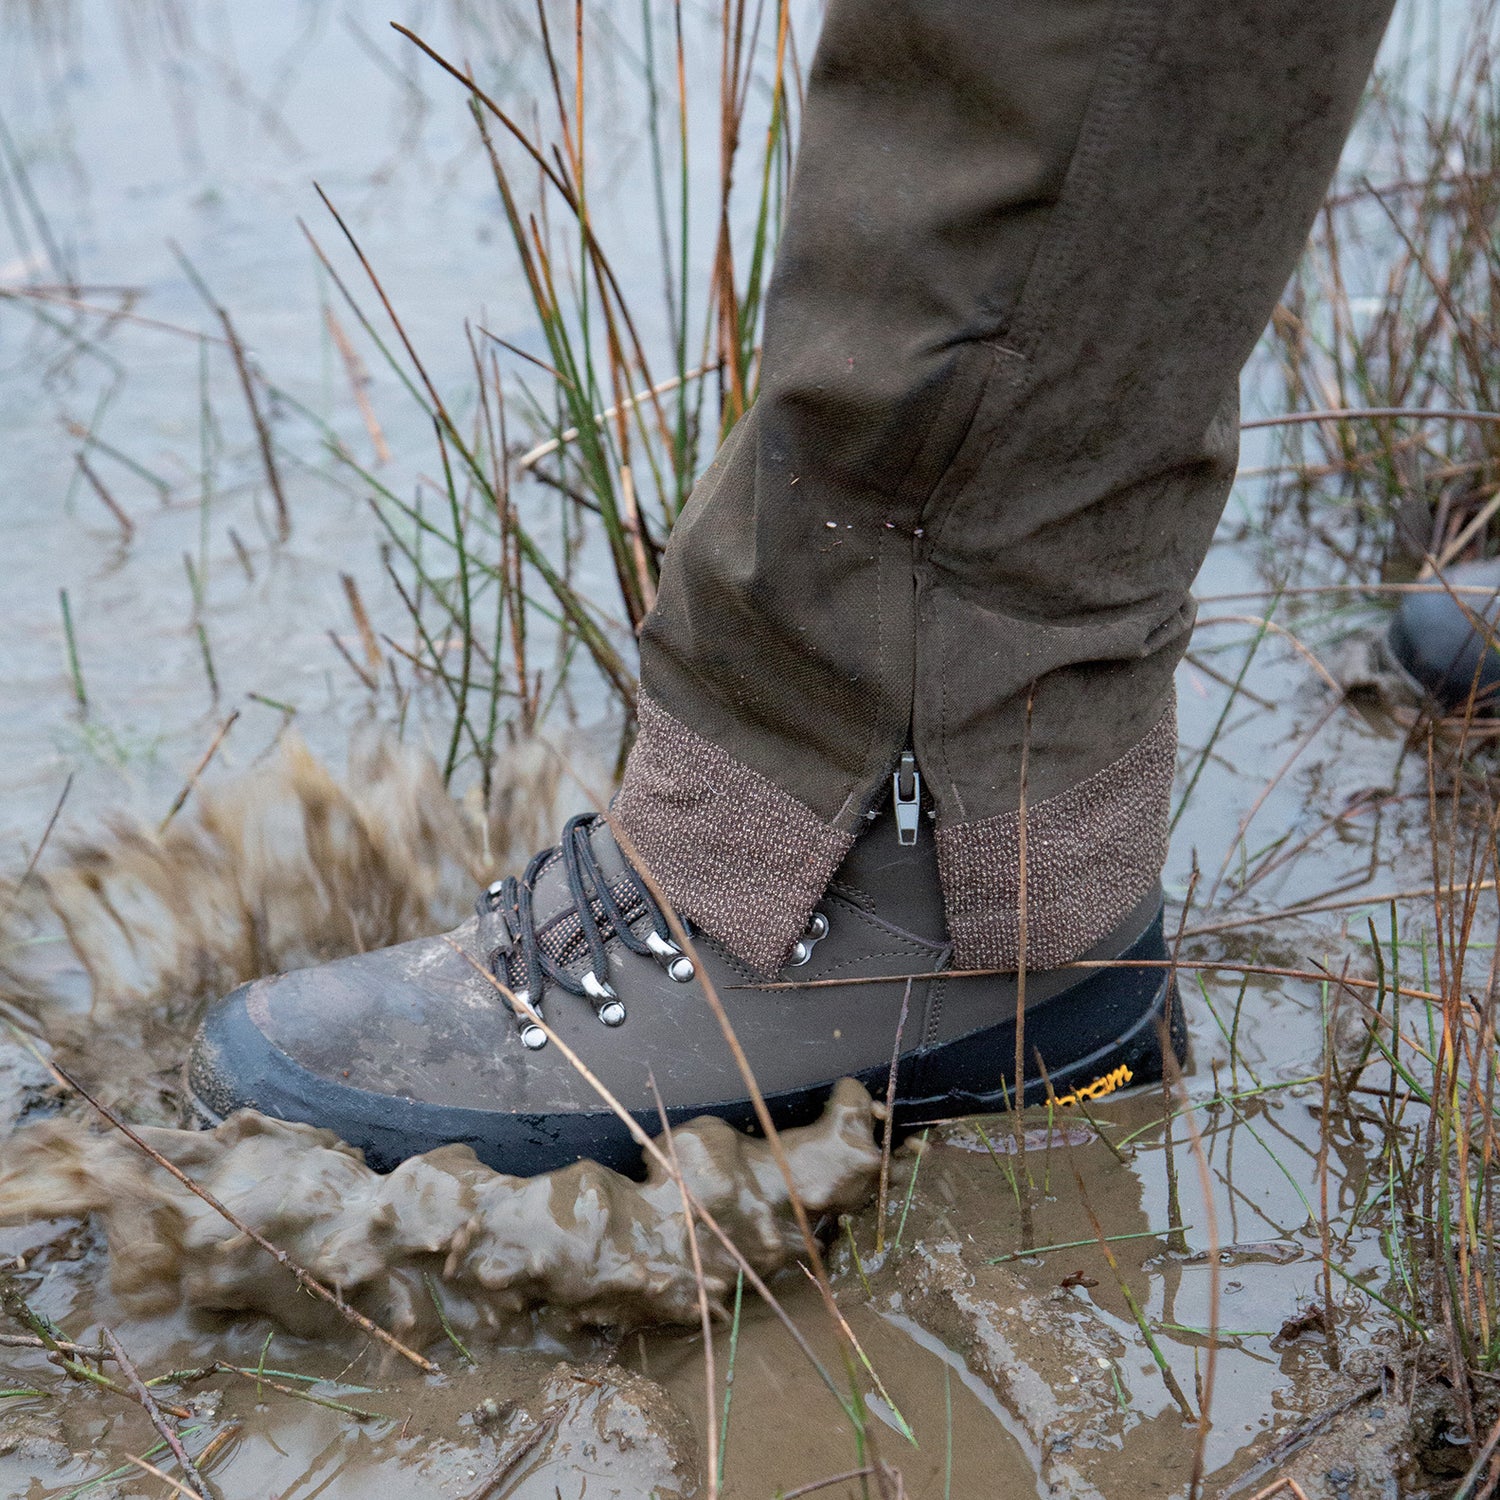 Verney-Carron-Chassure-Ibex-Waterproof-Boots